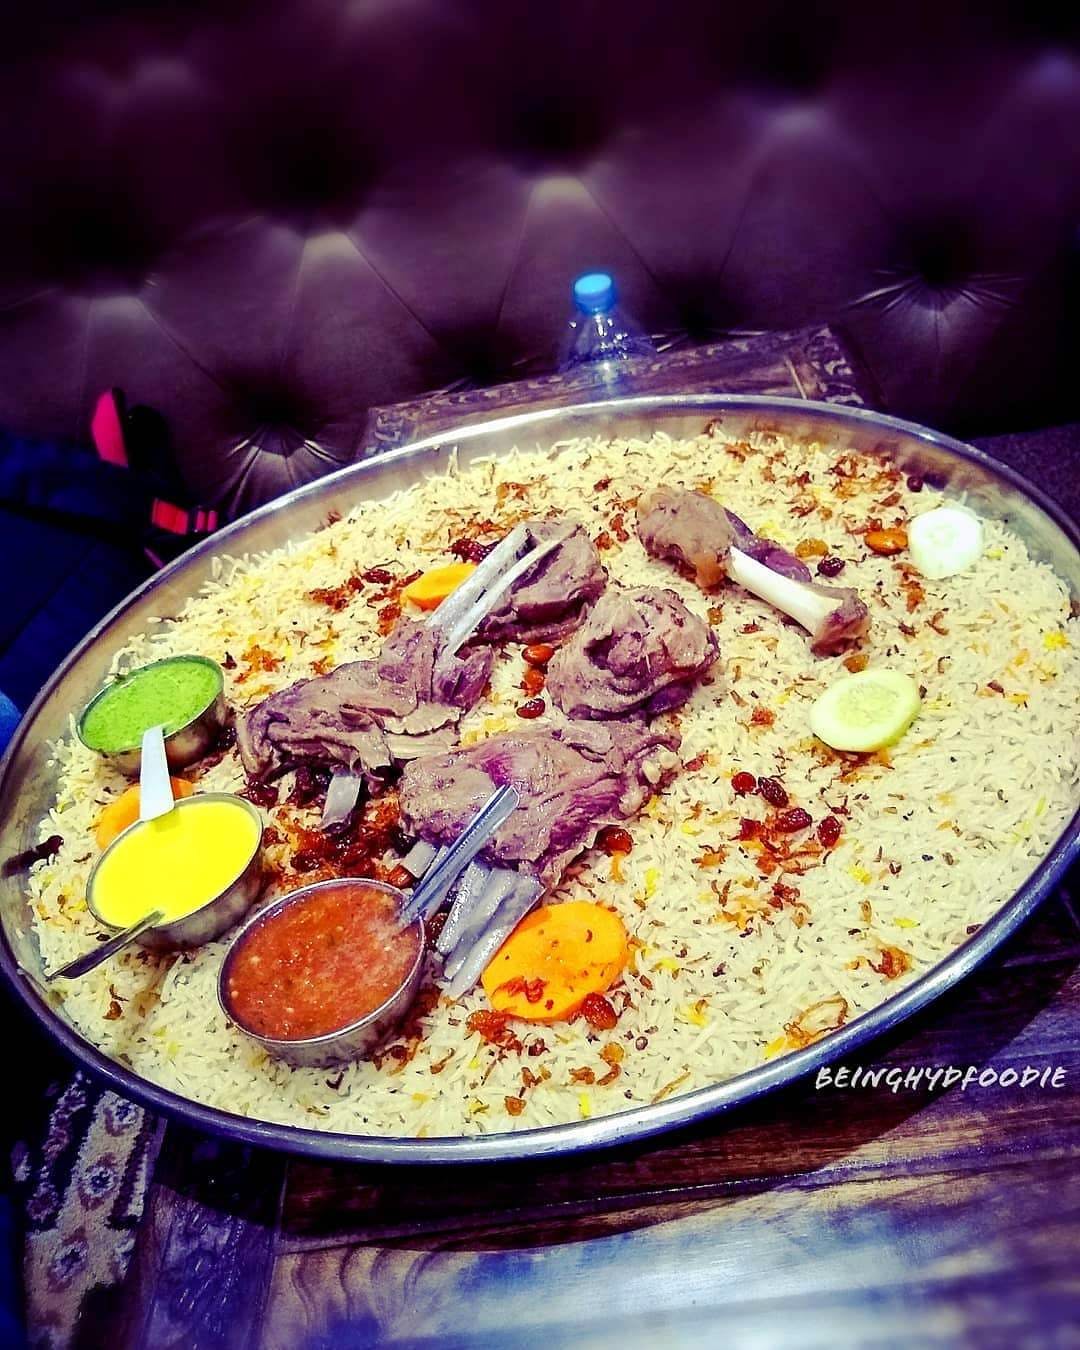 Dish,Cuisine,Food,Ingredient,Biryani,Kabsa,Indian cuisine,Recipe,Produce,Pakistani cuisine